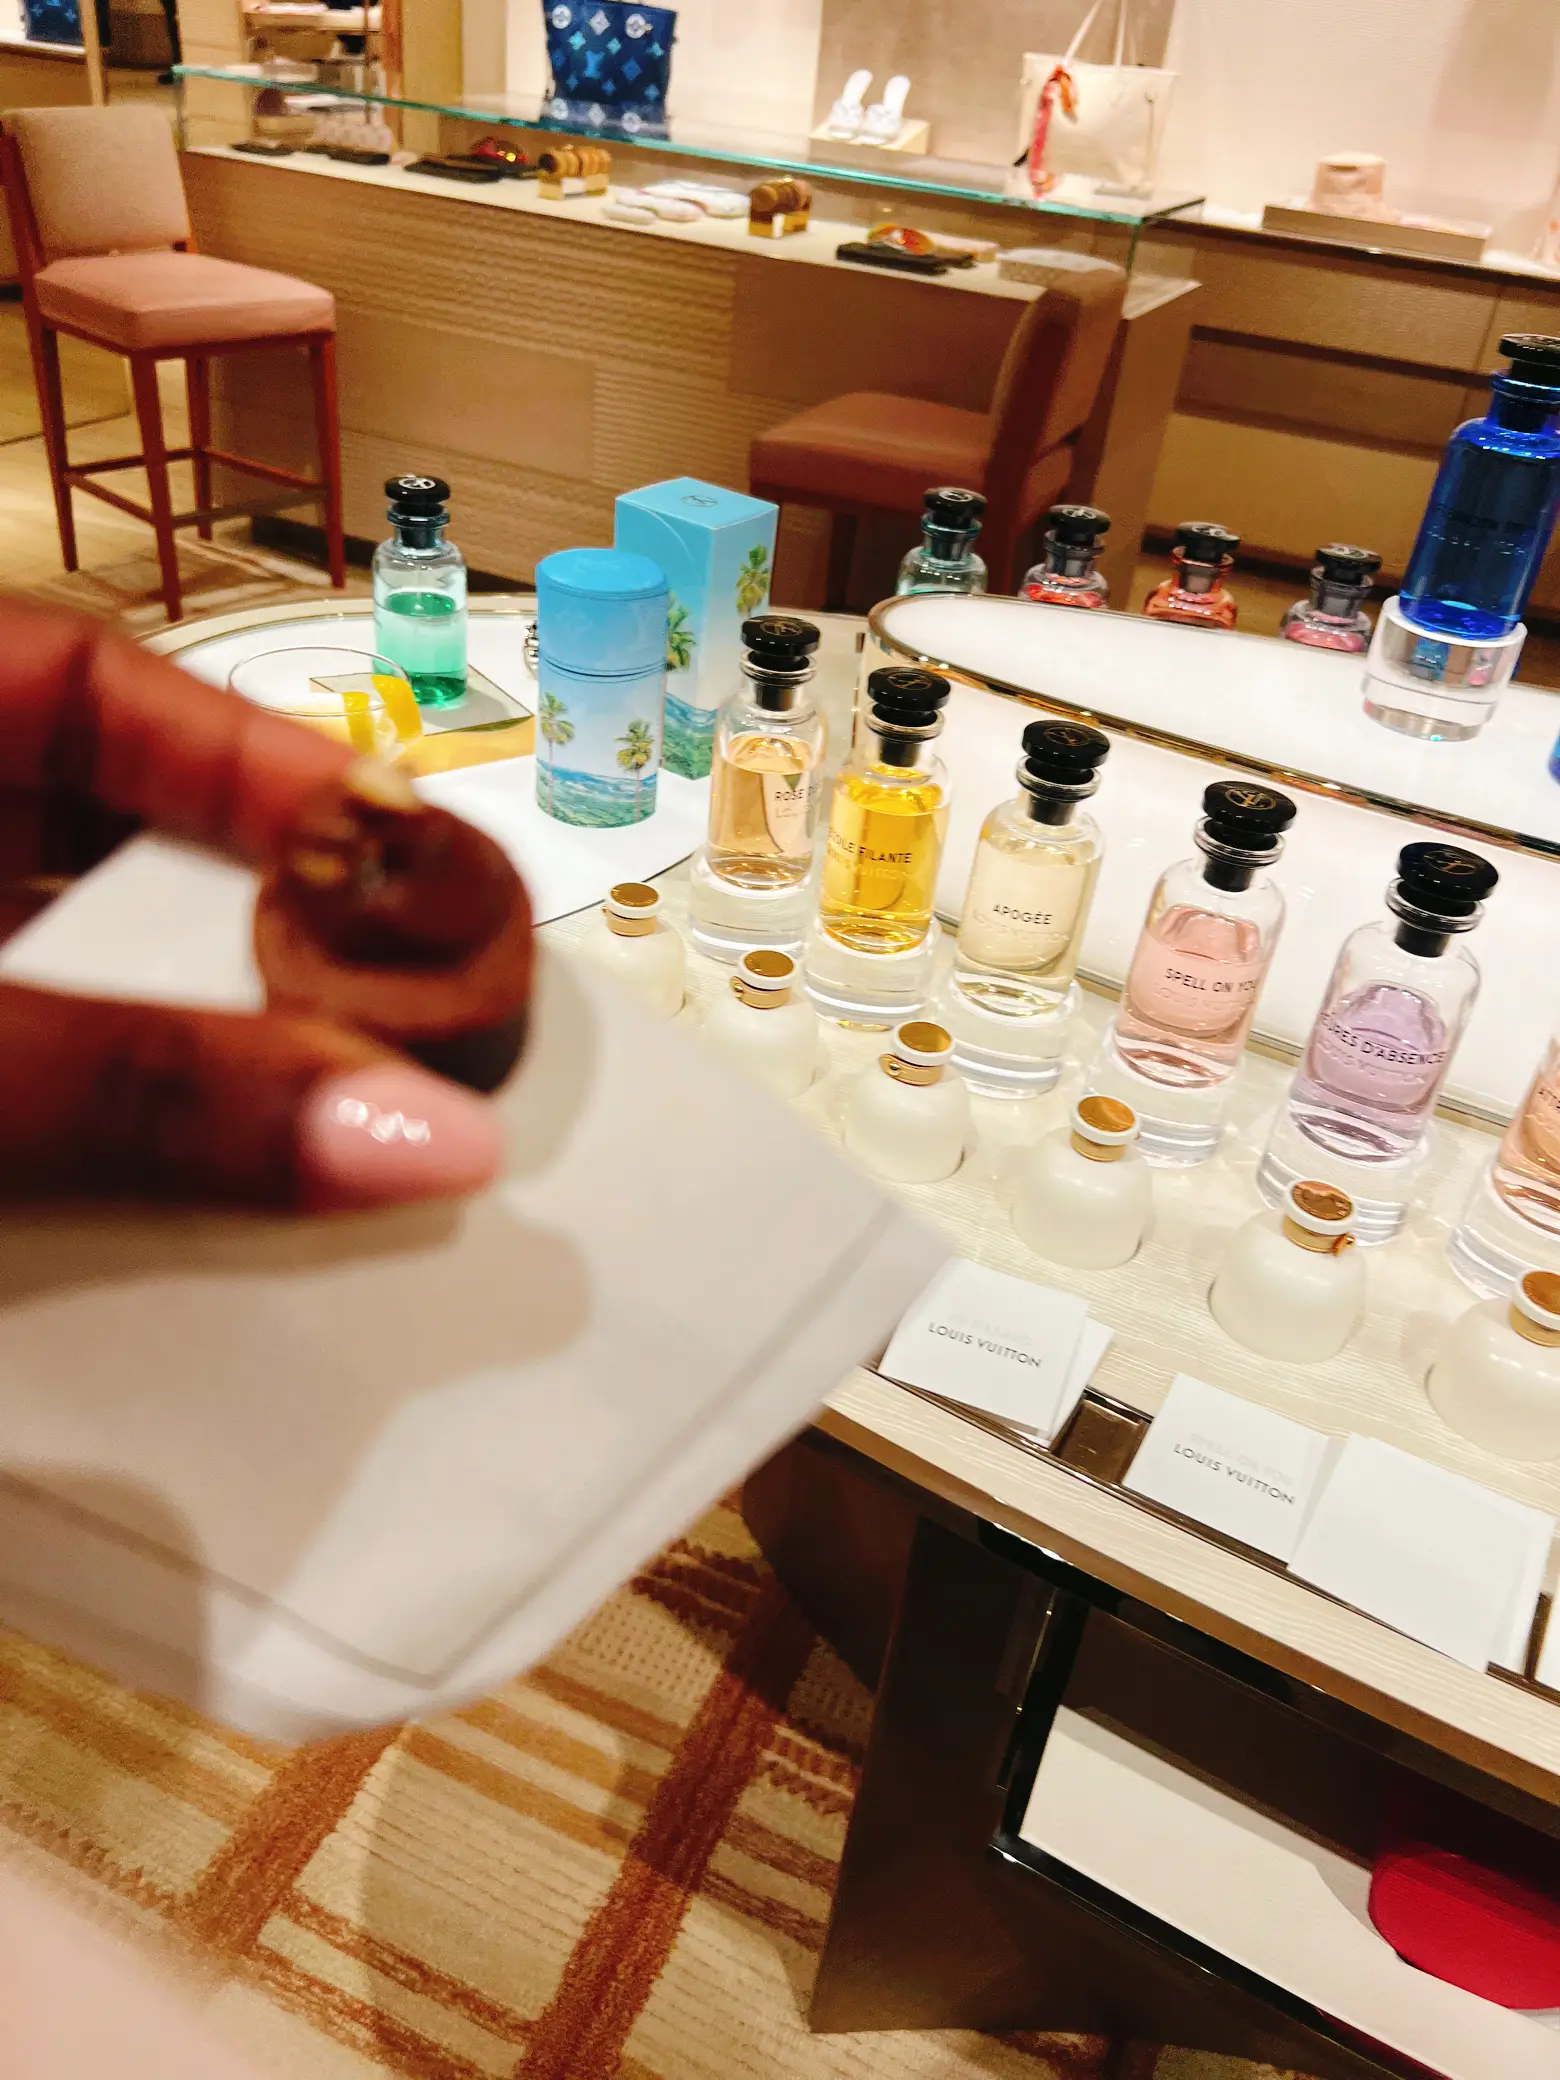 Louis Vuttion: Apogee (Fragrance review) #luxury #luxuryfragrances